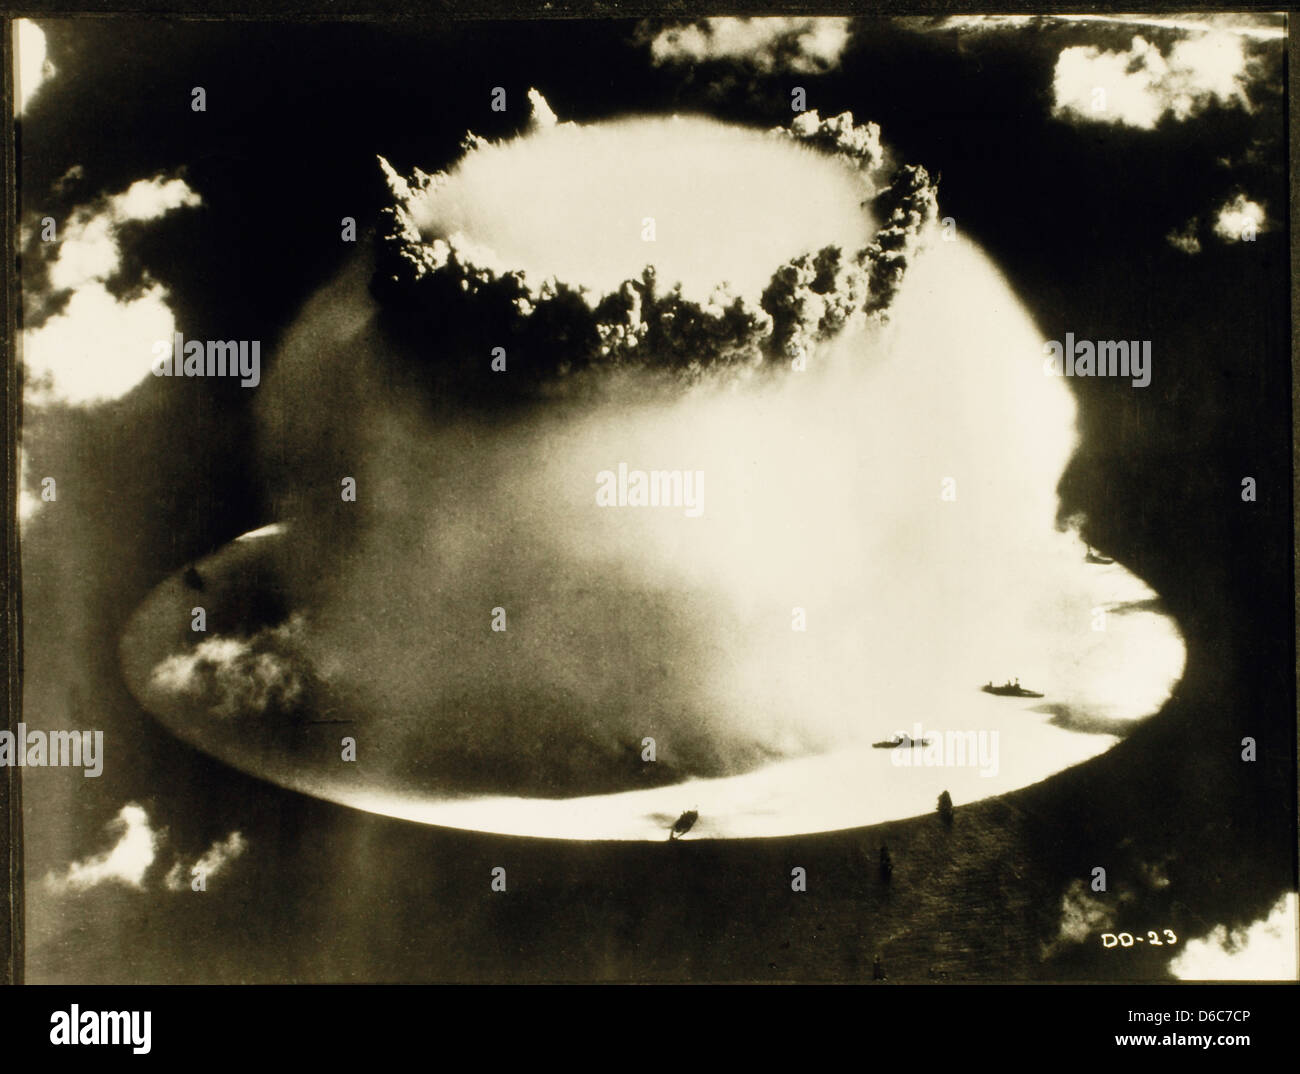 La Bomba atomica Test, Bikini Atoll, 1946 Foto Stock